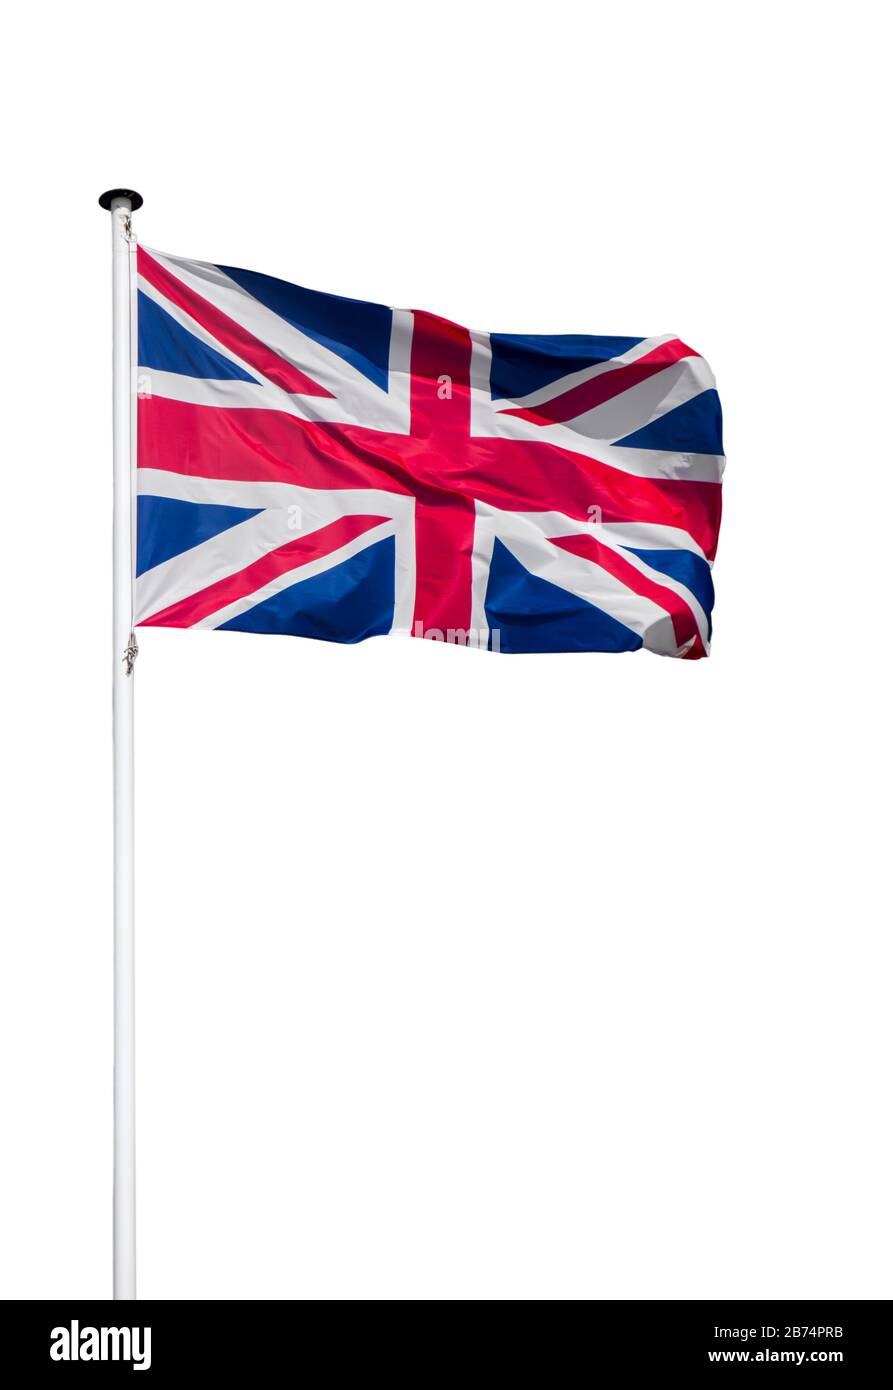 Union Jack / national flag of the United Kingdom on flagpole flying in the wind against white background Stock Photo